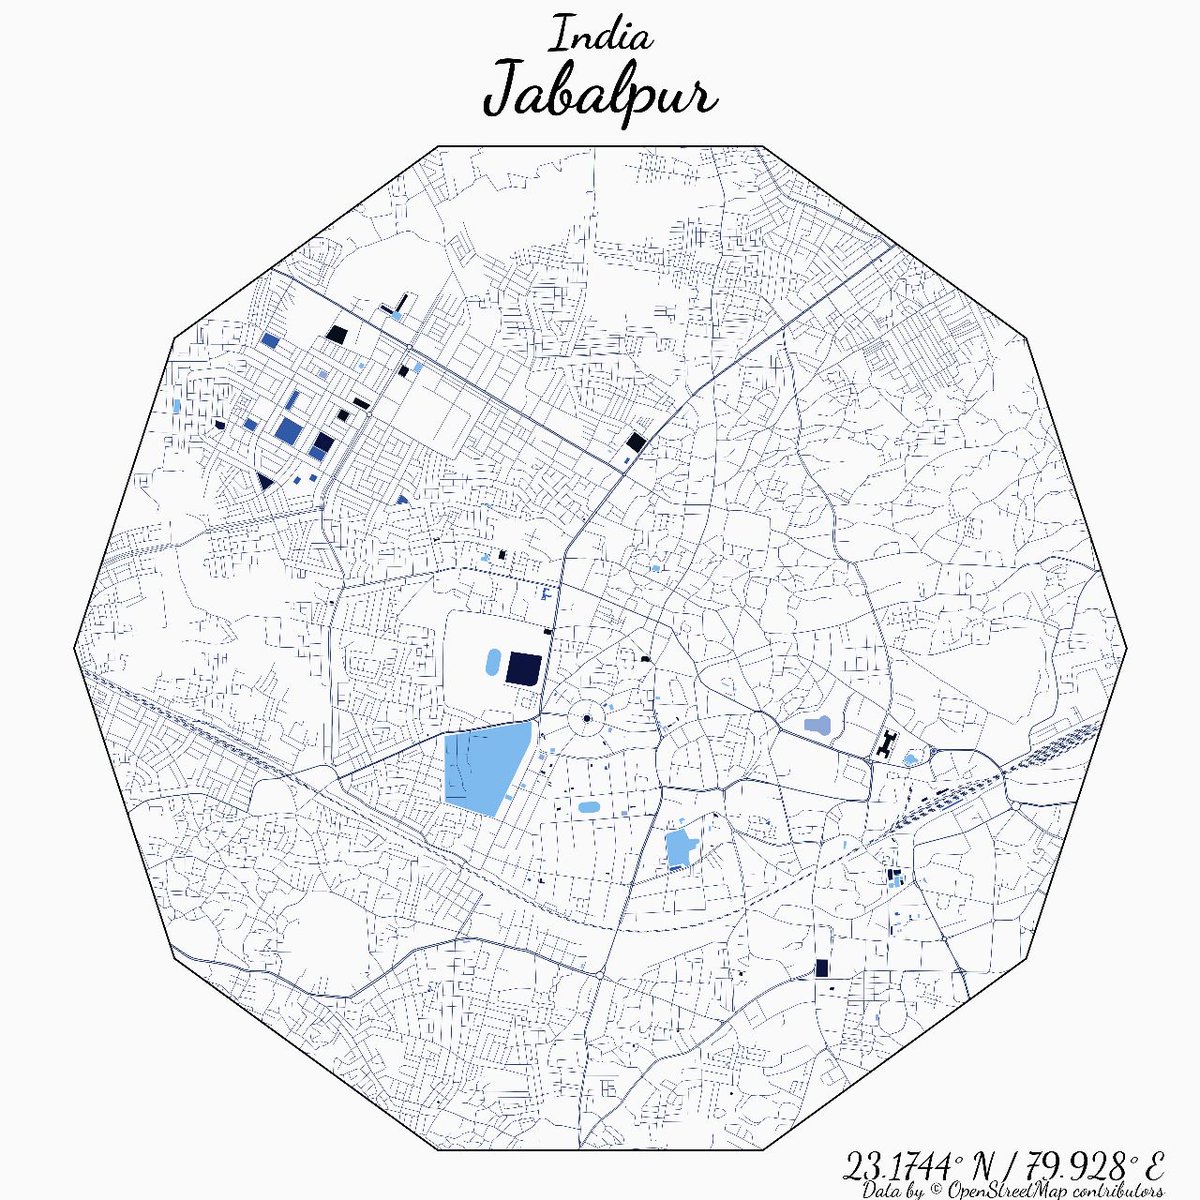 My city map #rcityviews #RShiny
Jabalpur city, India
Delftware theme 
#RStudio